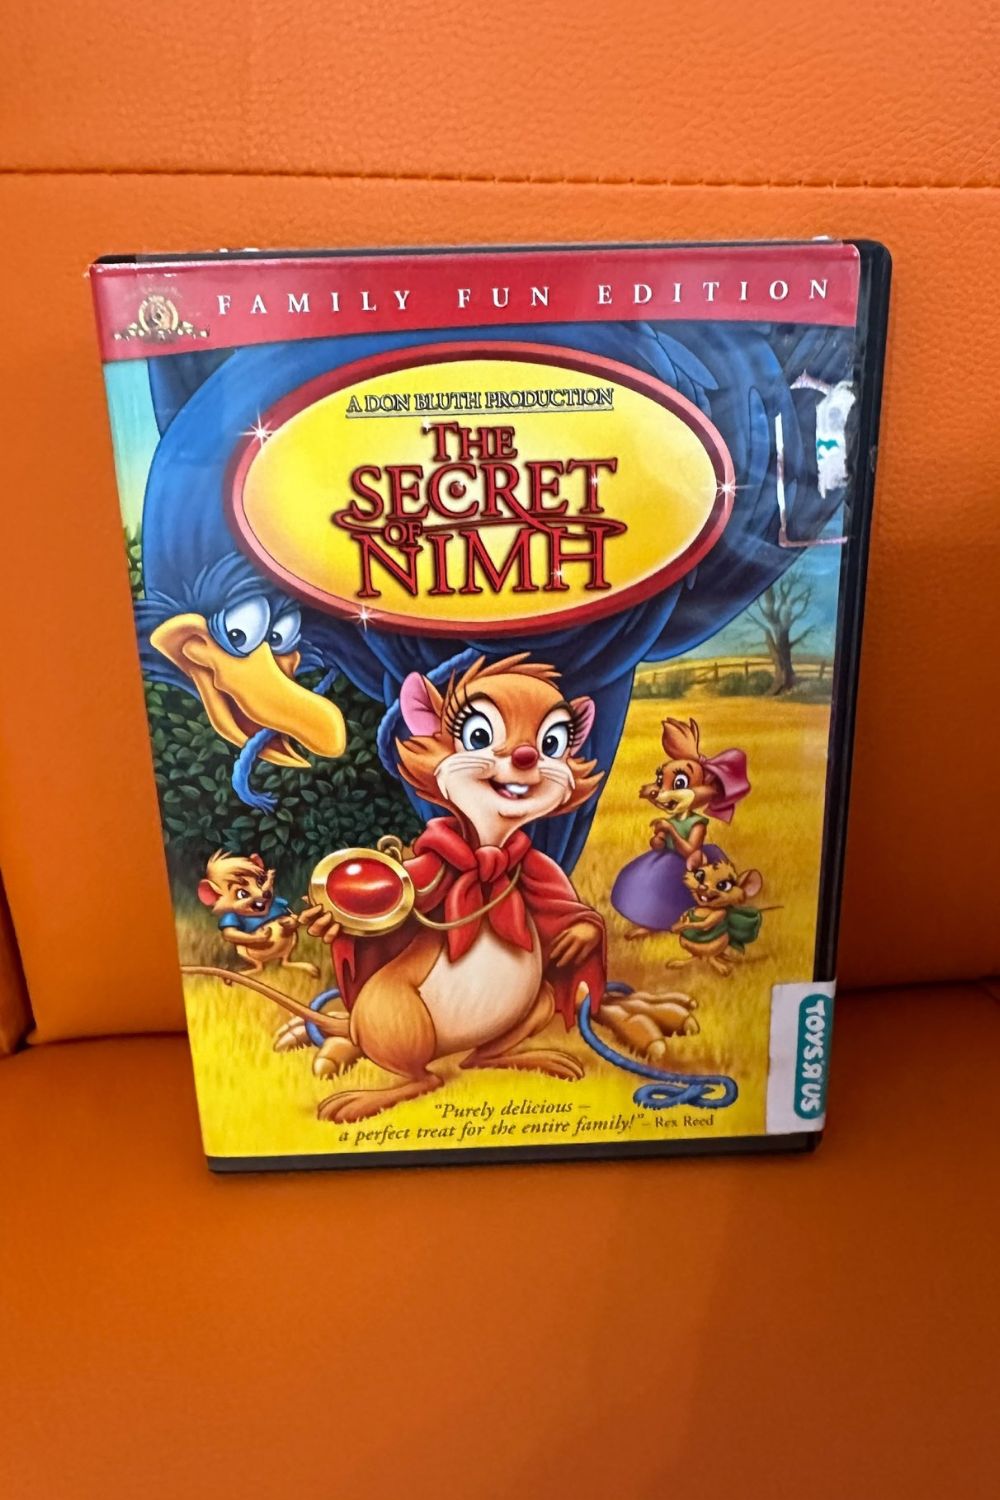 THE SECRET OF NIMH - FAMILY FUN EDITION DVD*